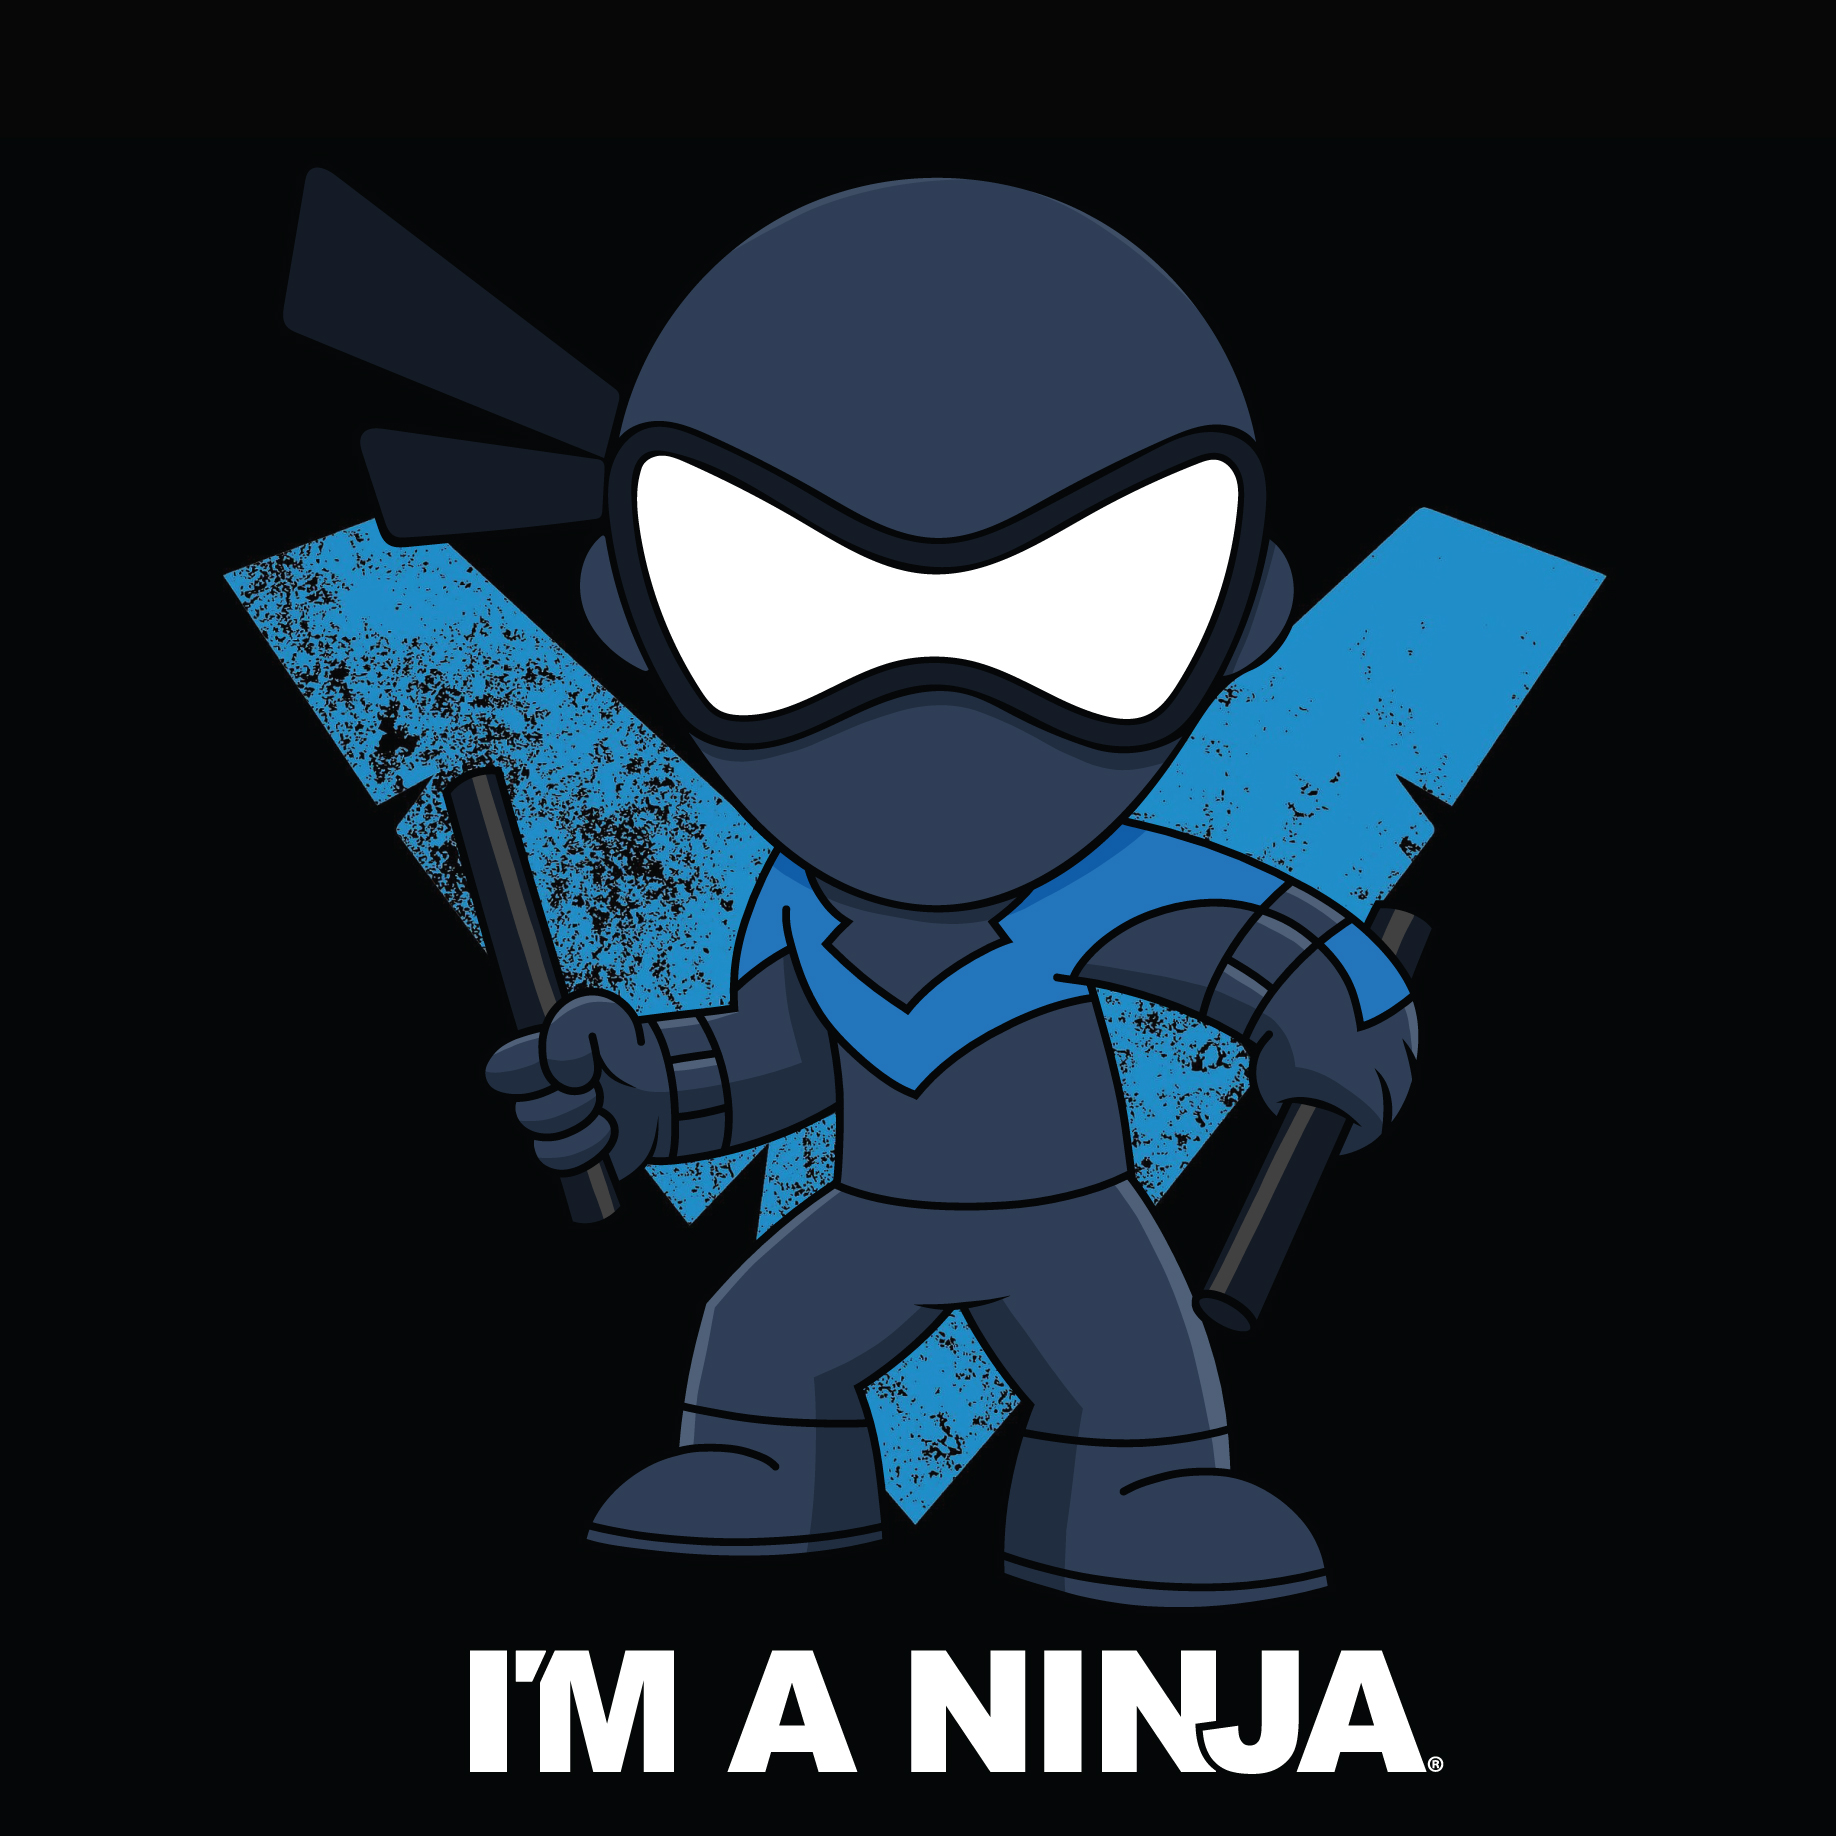 Nightwing x I'M A NINJA